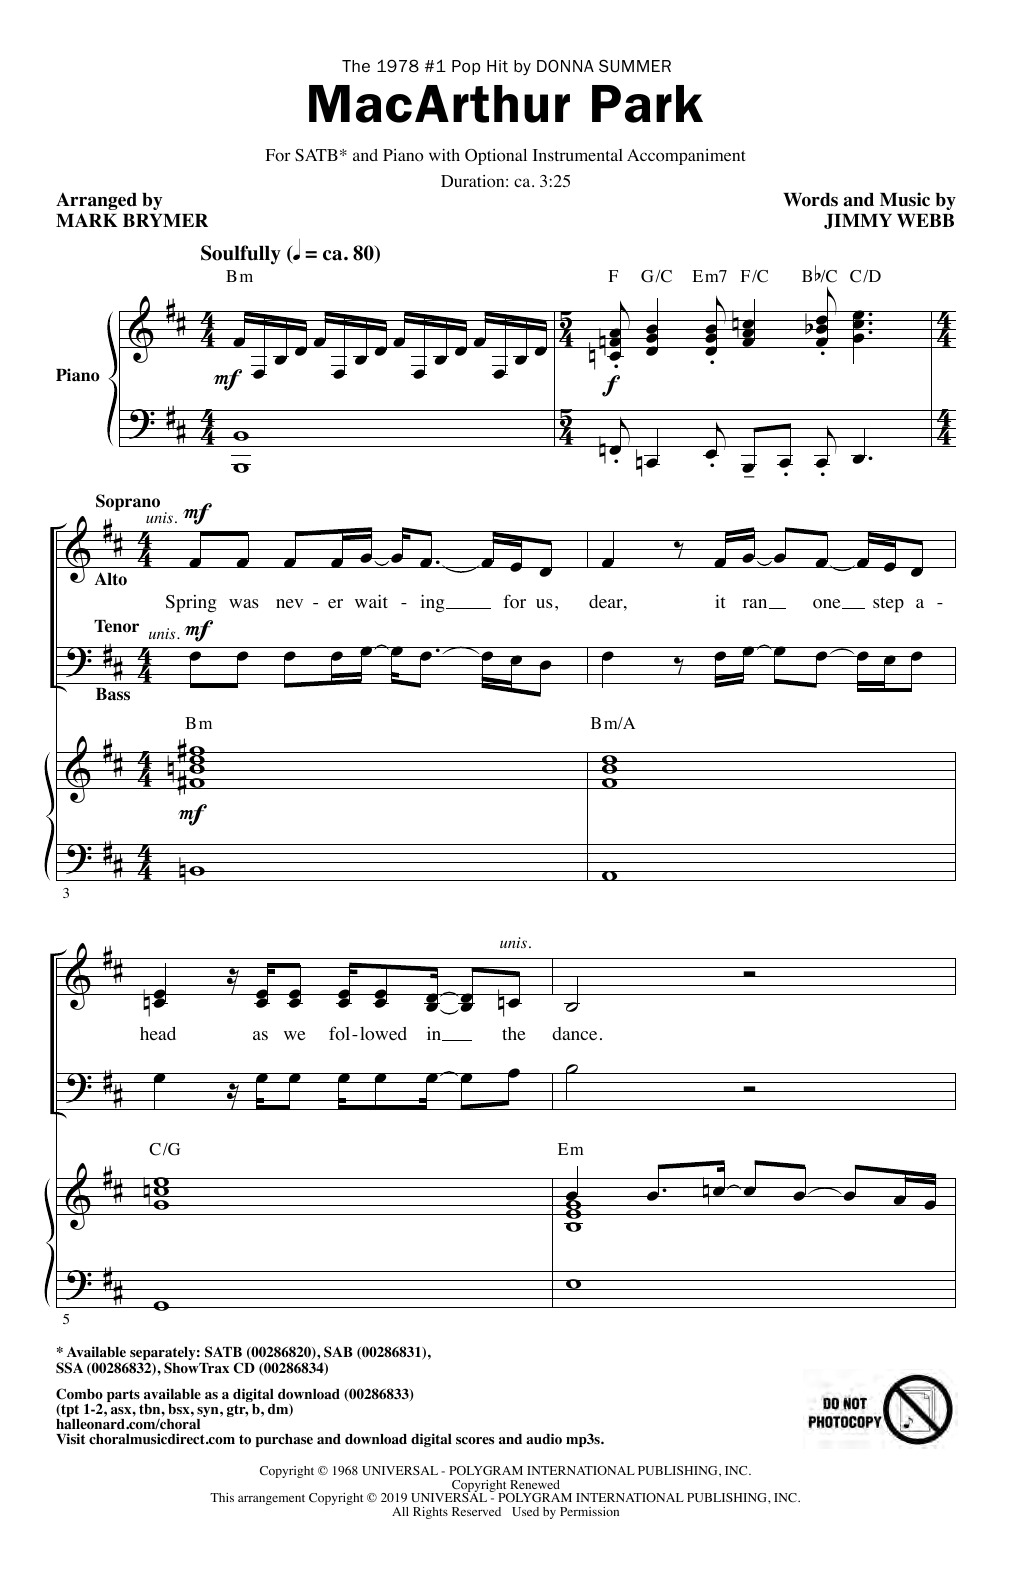 Donna Summer MacArthur Park (arr. Mark Brymer) Sheet Music Notes & Chords for SAB Choir - Download or Print PDF